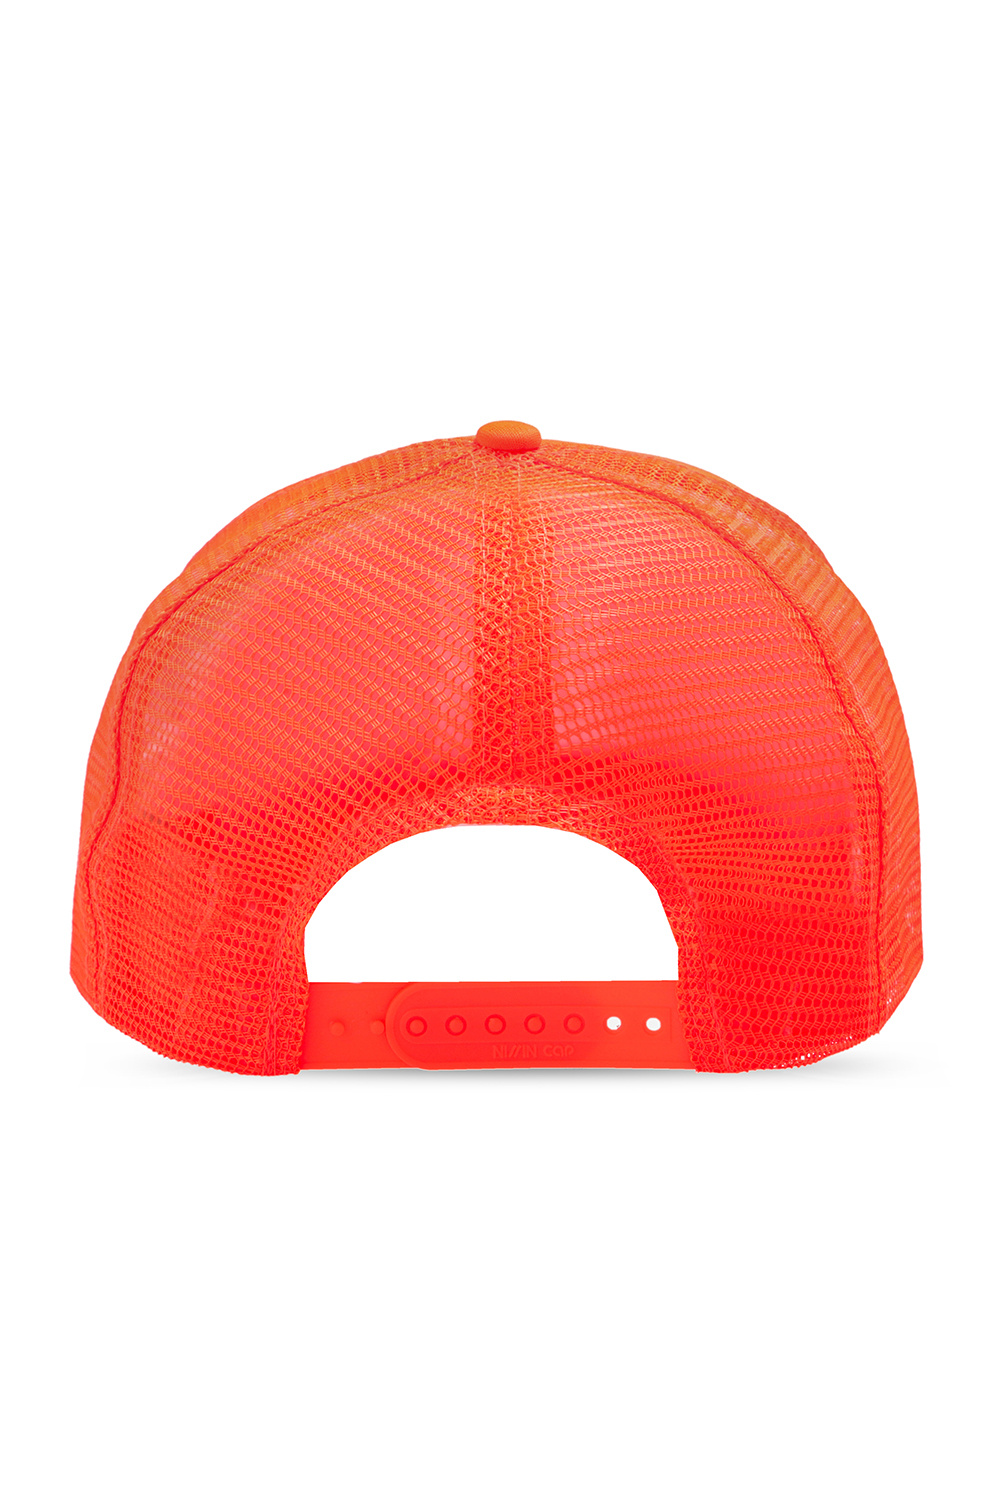 Women's Accessories | R13 Baseball cap | IetpShops | caps lighters 